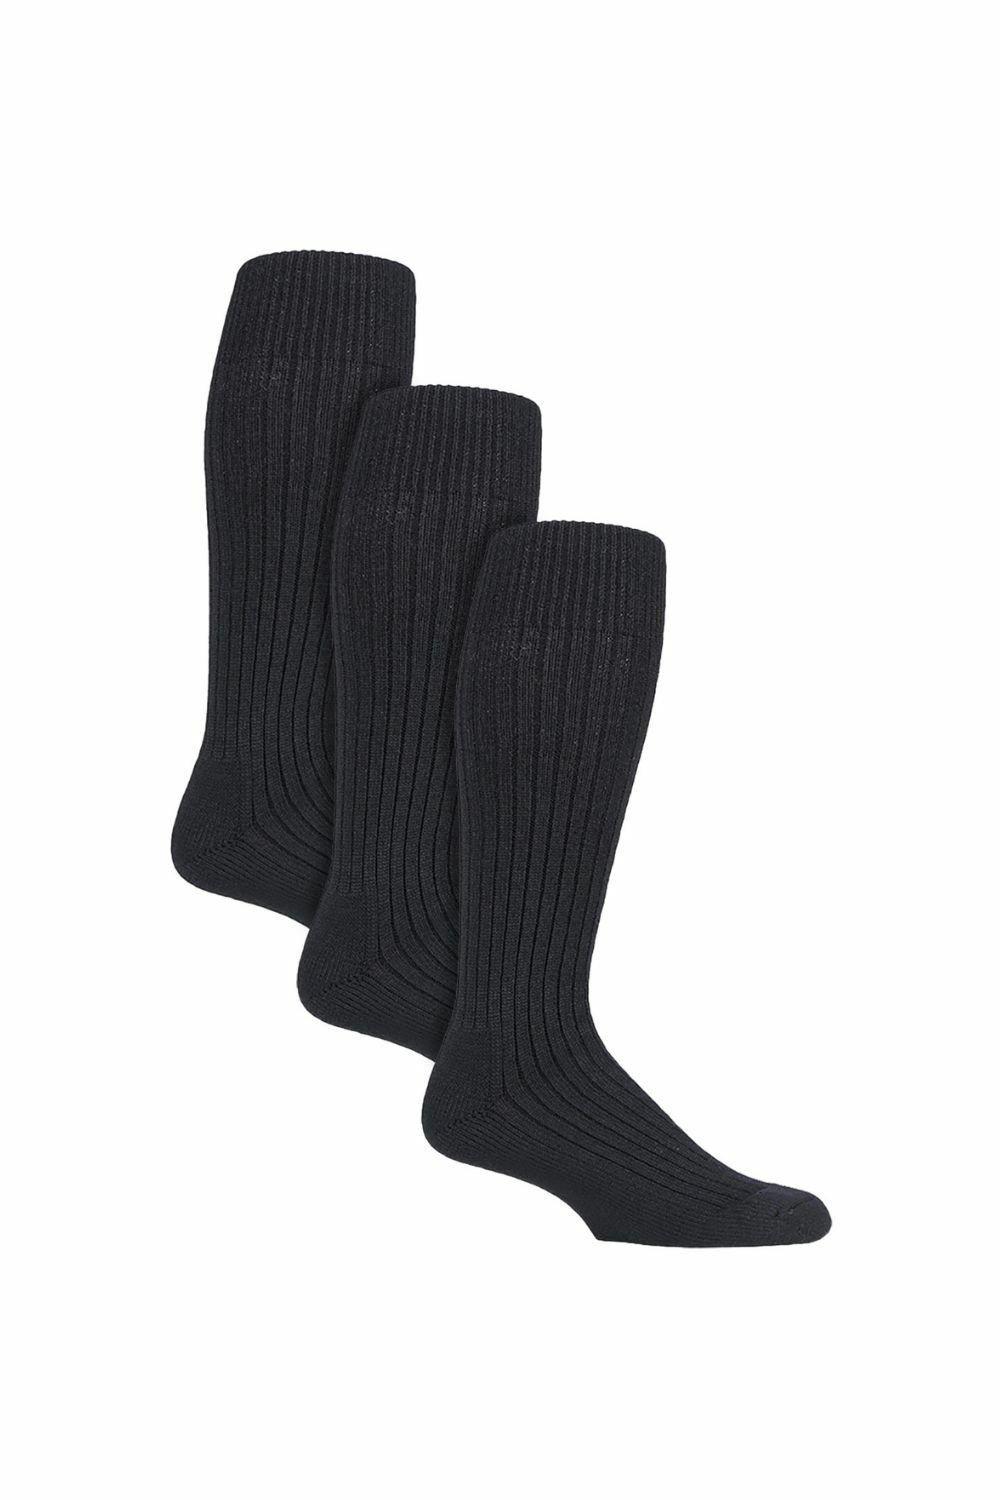 3 Pair Multipack Long Thick Knee High Military Socks